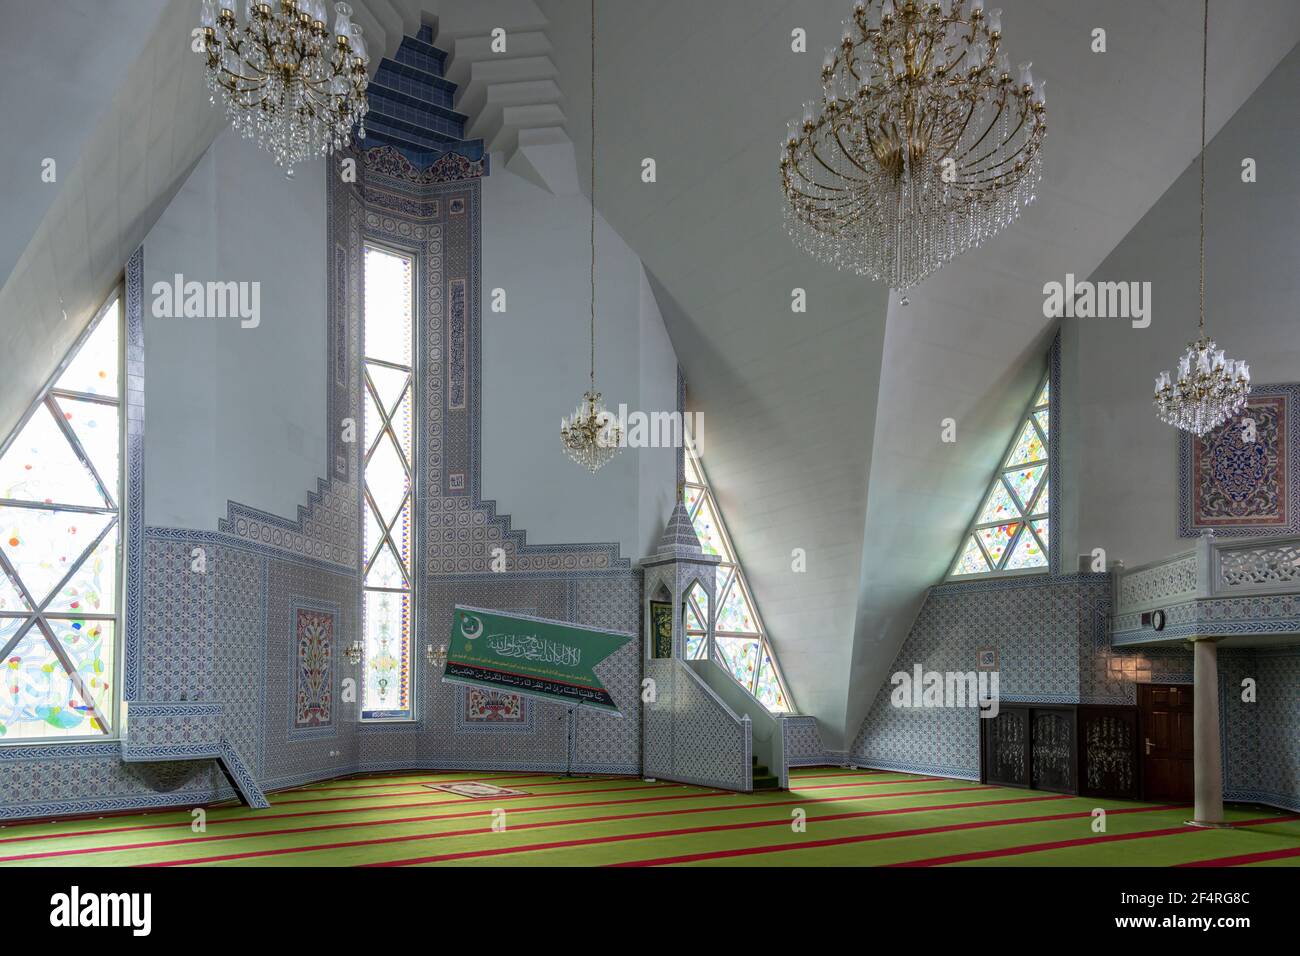 Ufa, Russland - 20. September 2019: Innenraum der Ufa-moschee in Baschkortonstan, Russland. Stockfoto